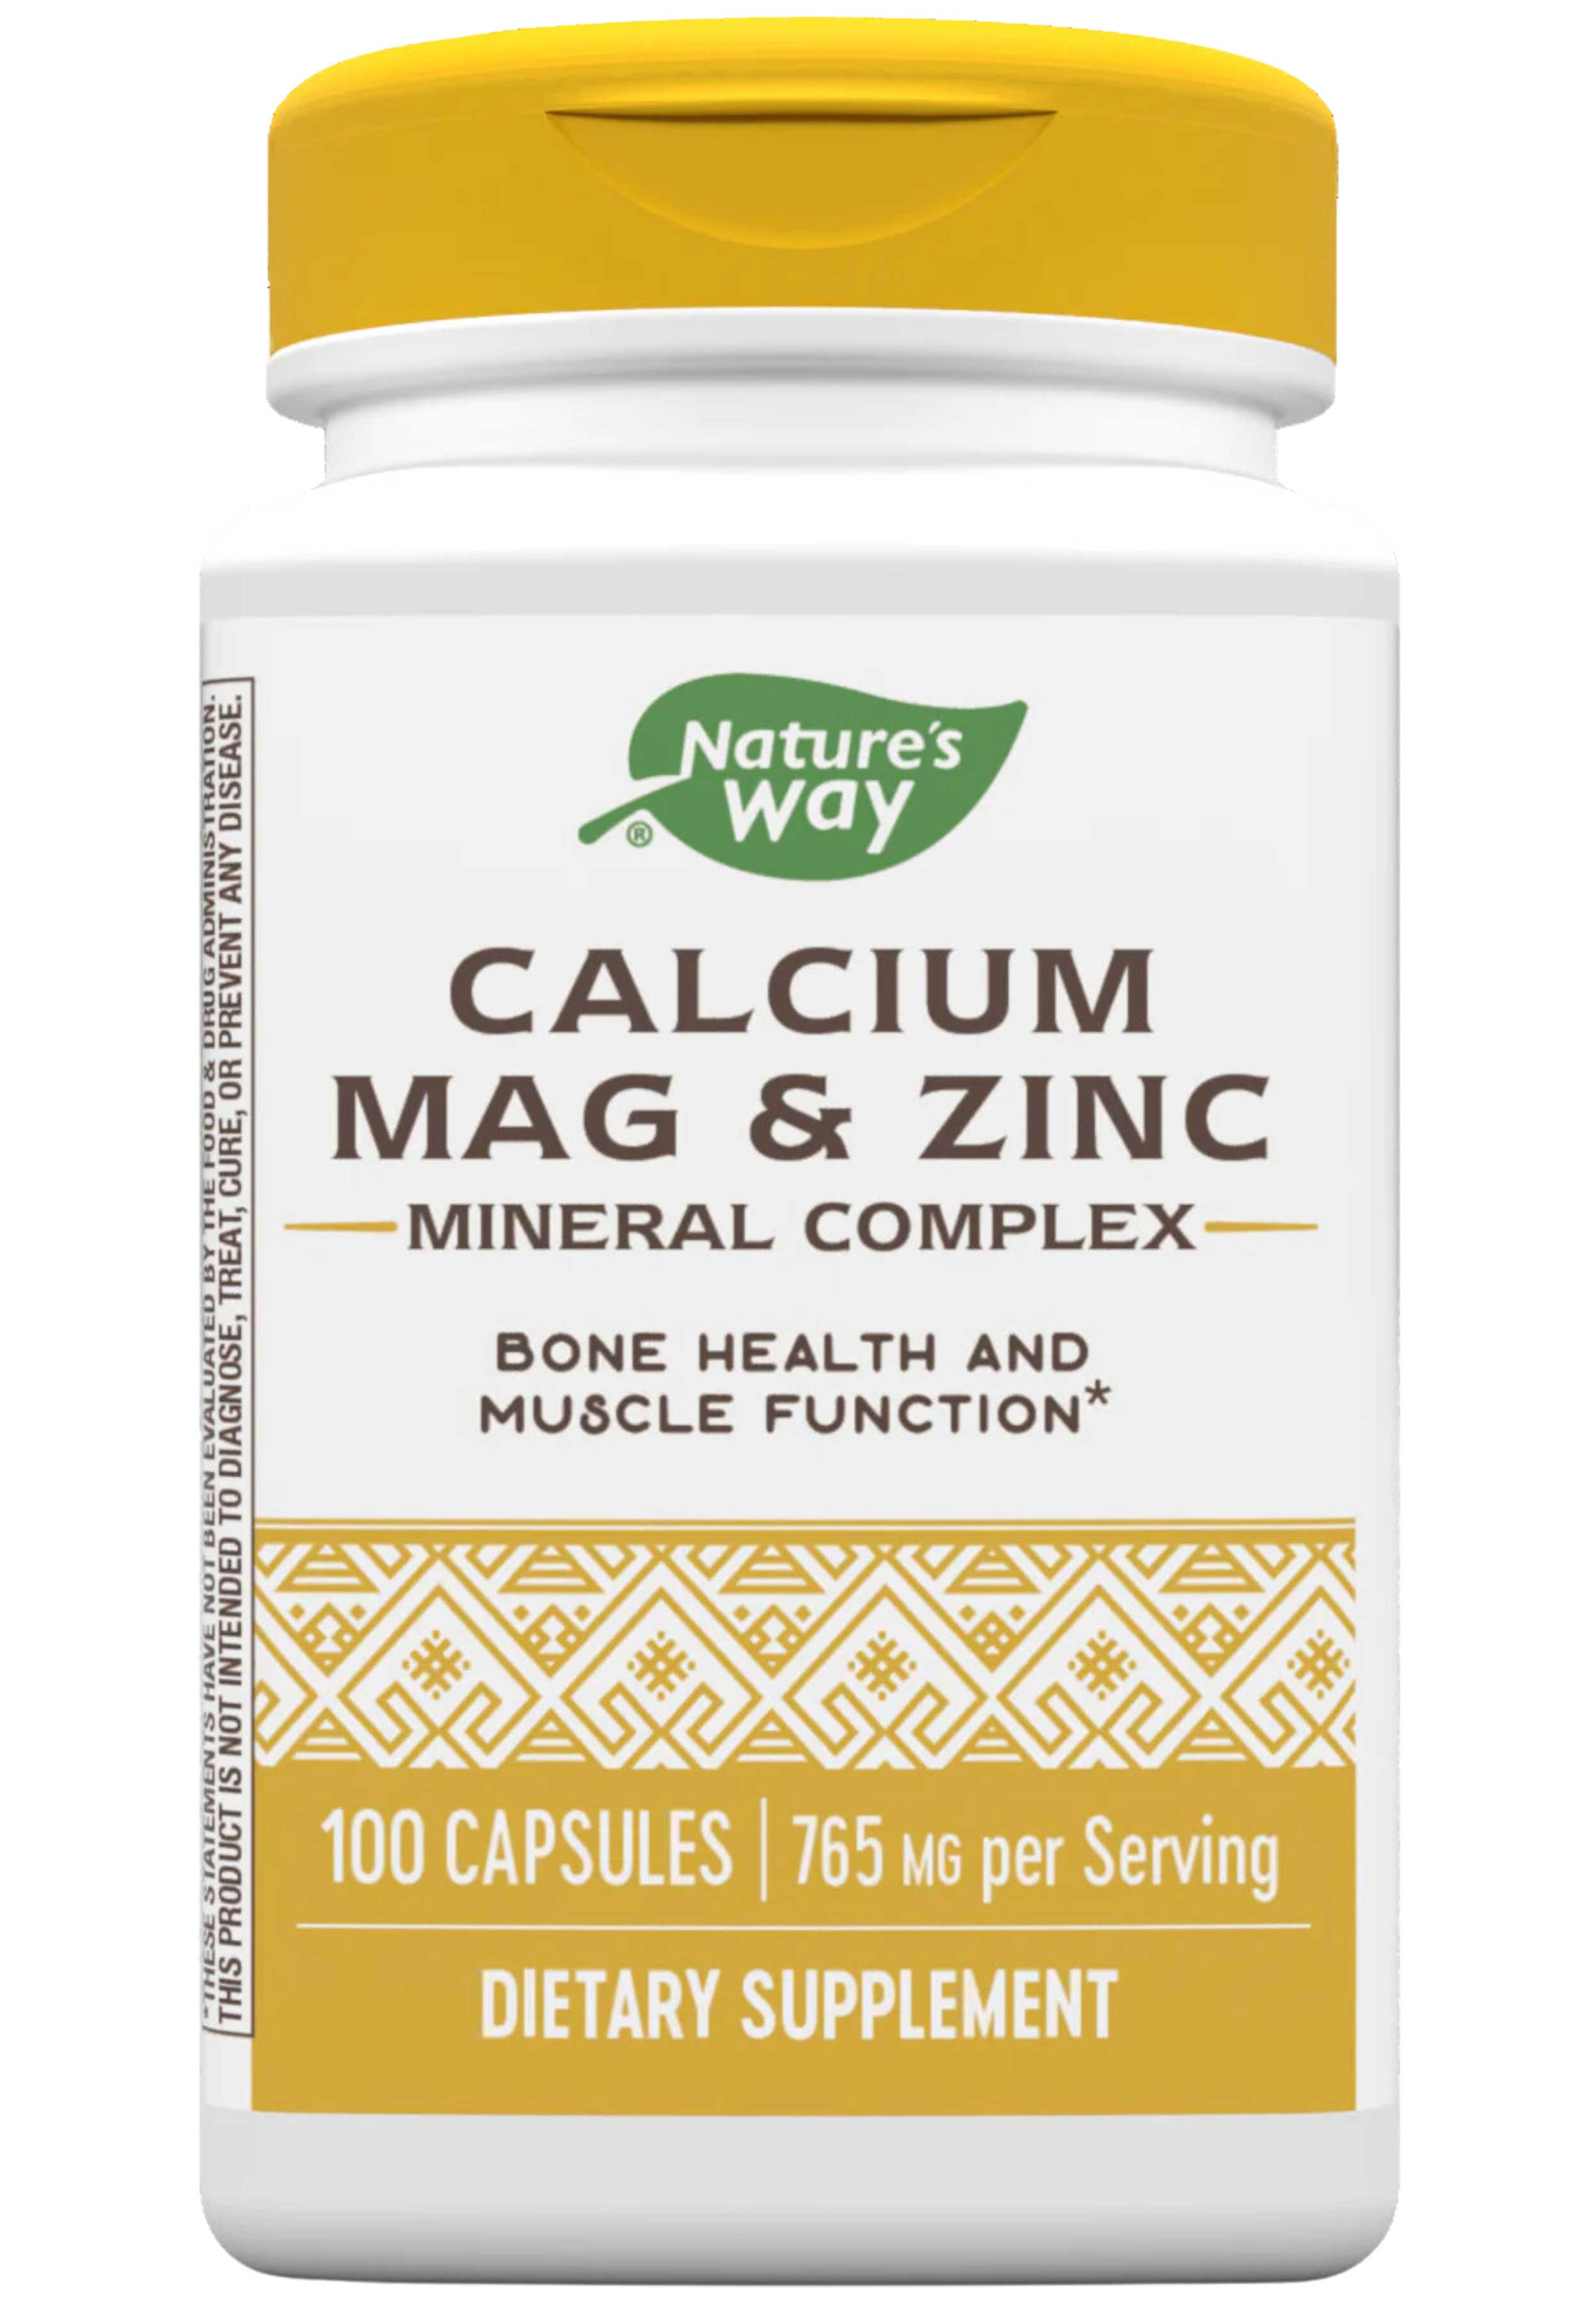 Nature's Way Calcium Mag & Zinc